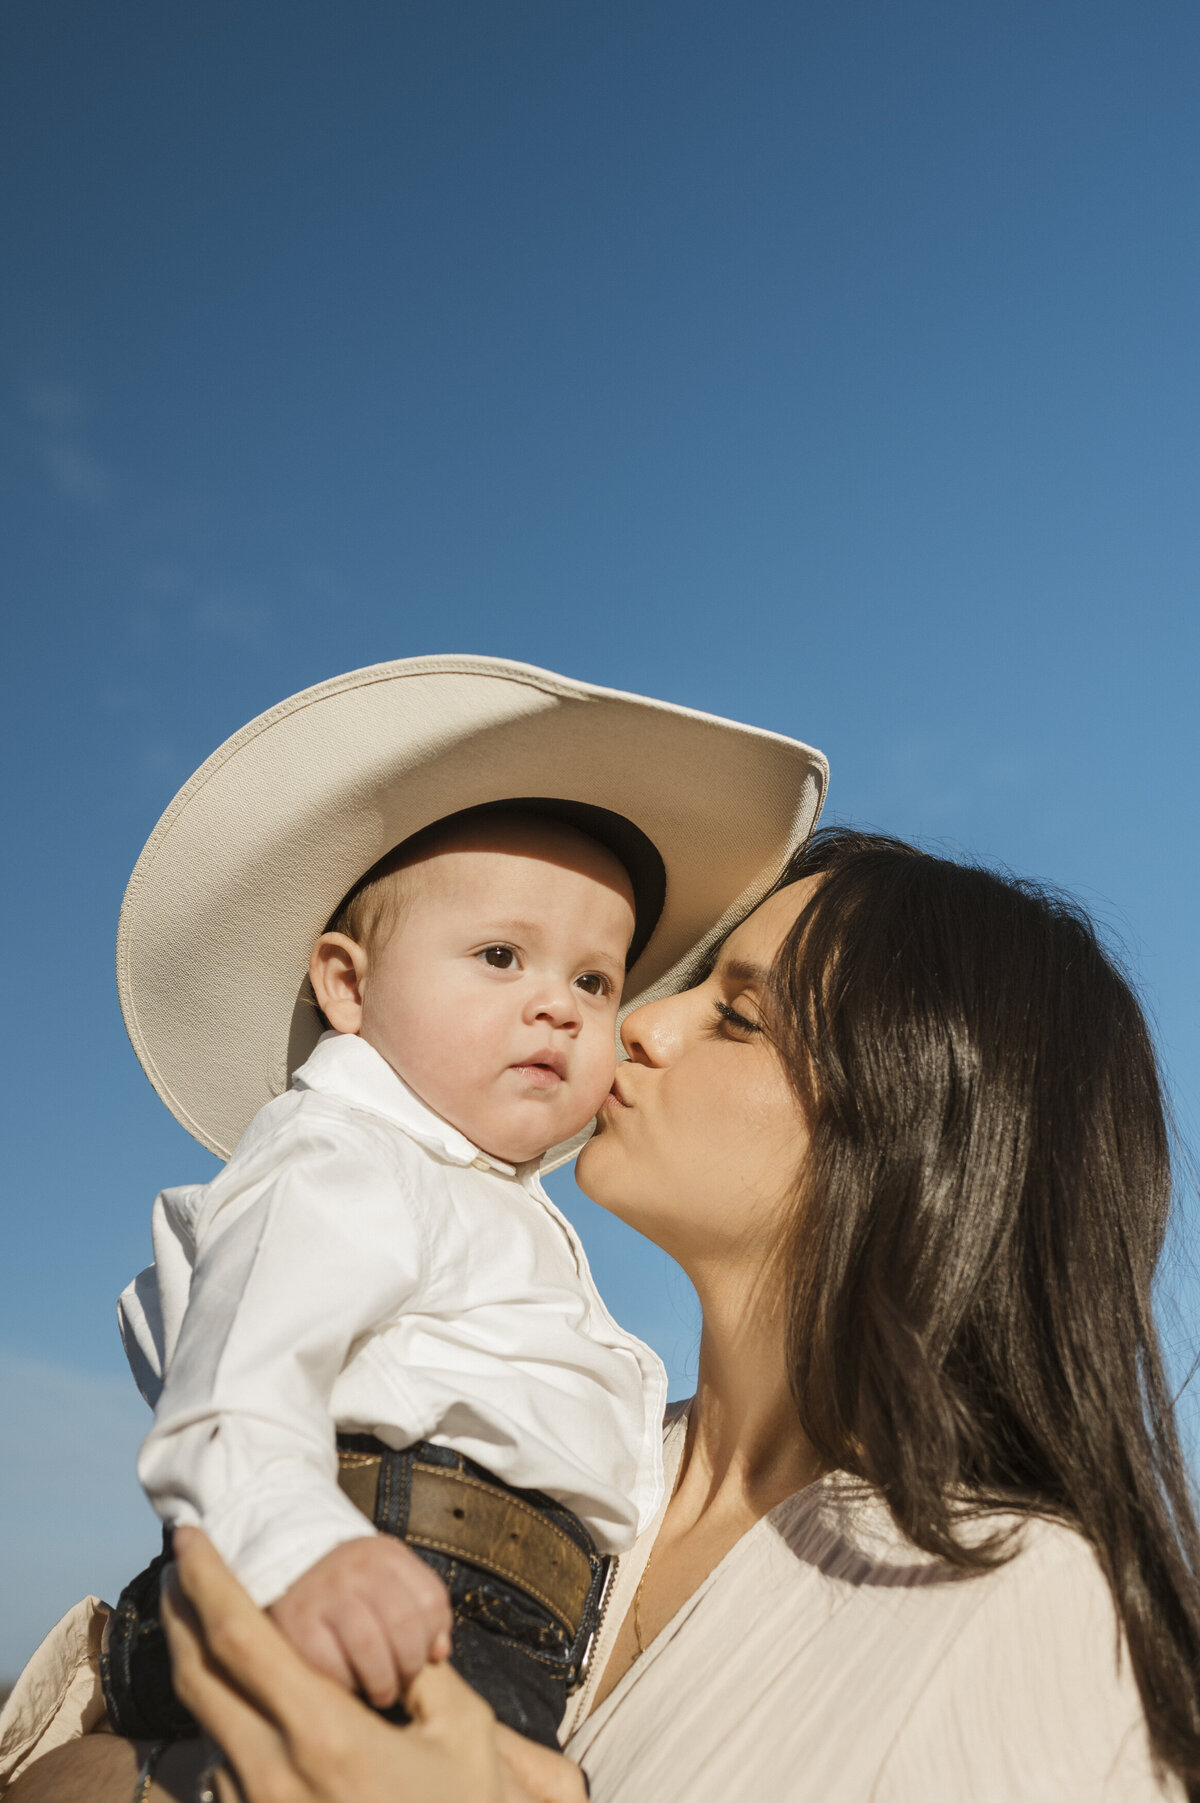 Baby in cowboy hat